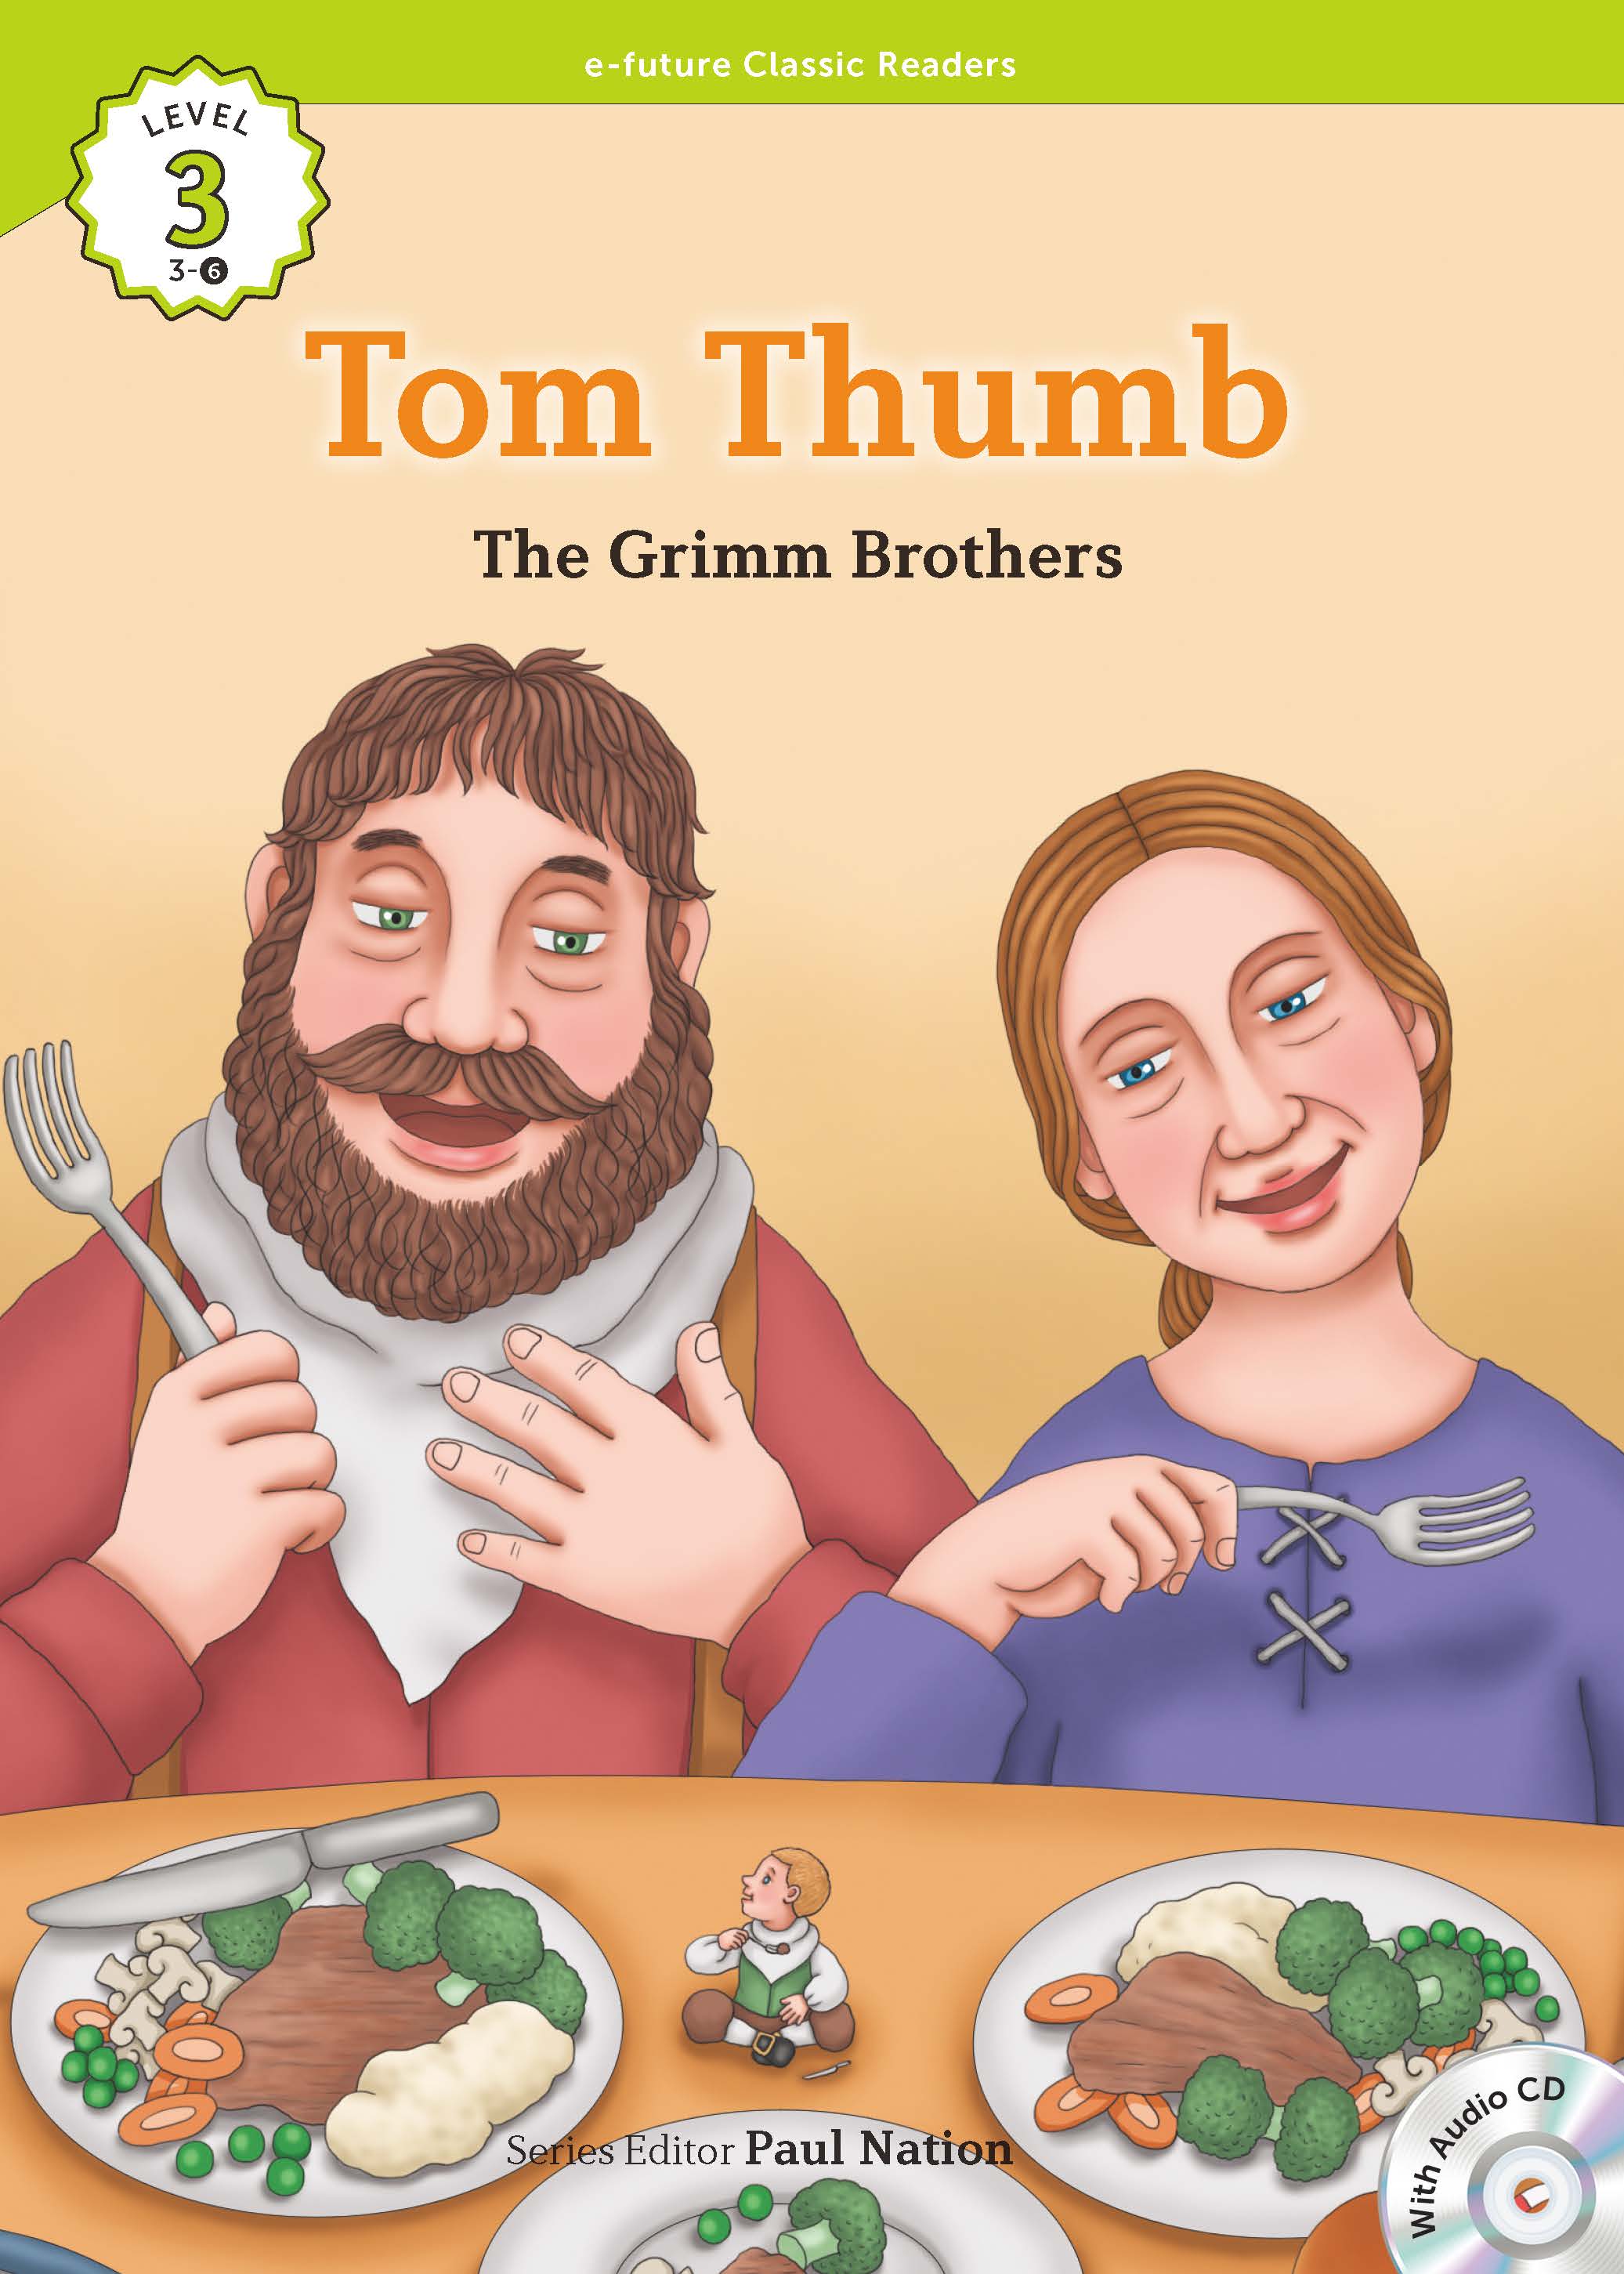 Аудиокнига братья гримм. Tom Reader. About Grimms brothers. Tom thumb сказка. Братья Гримм большой палец.